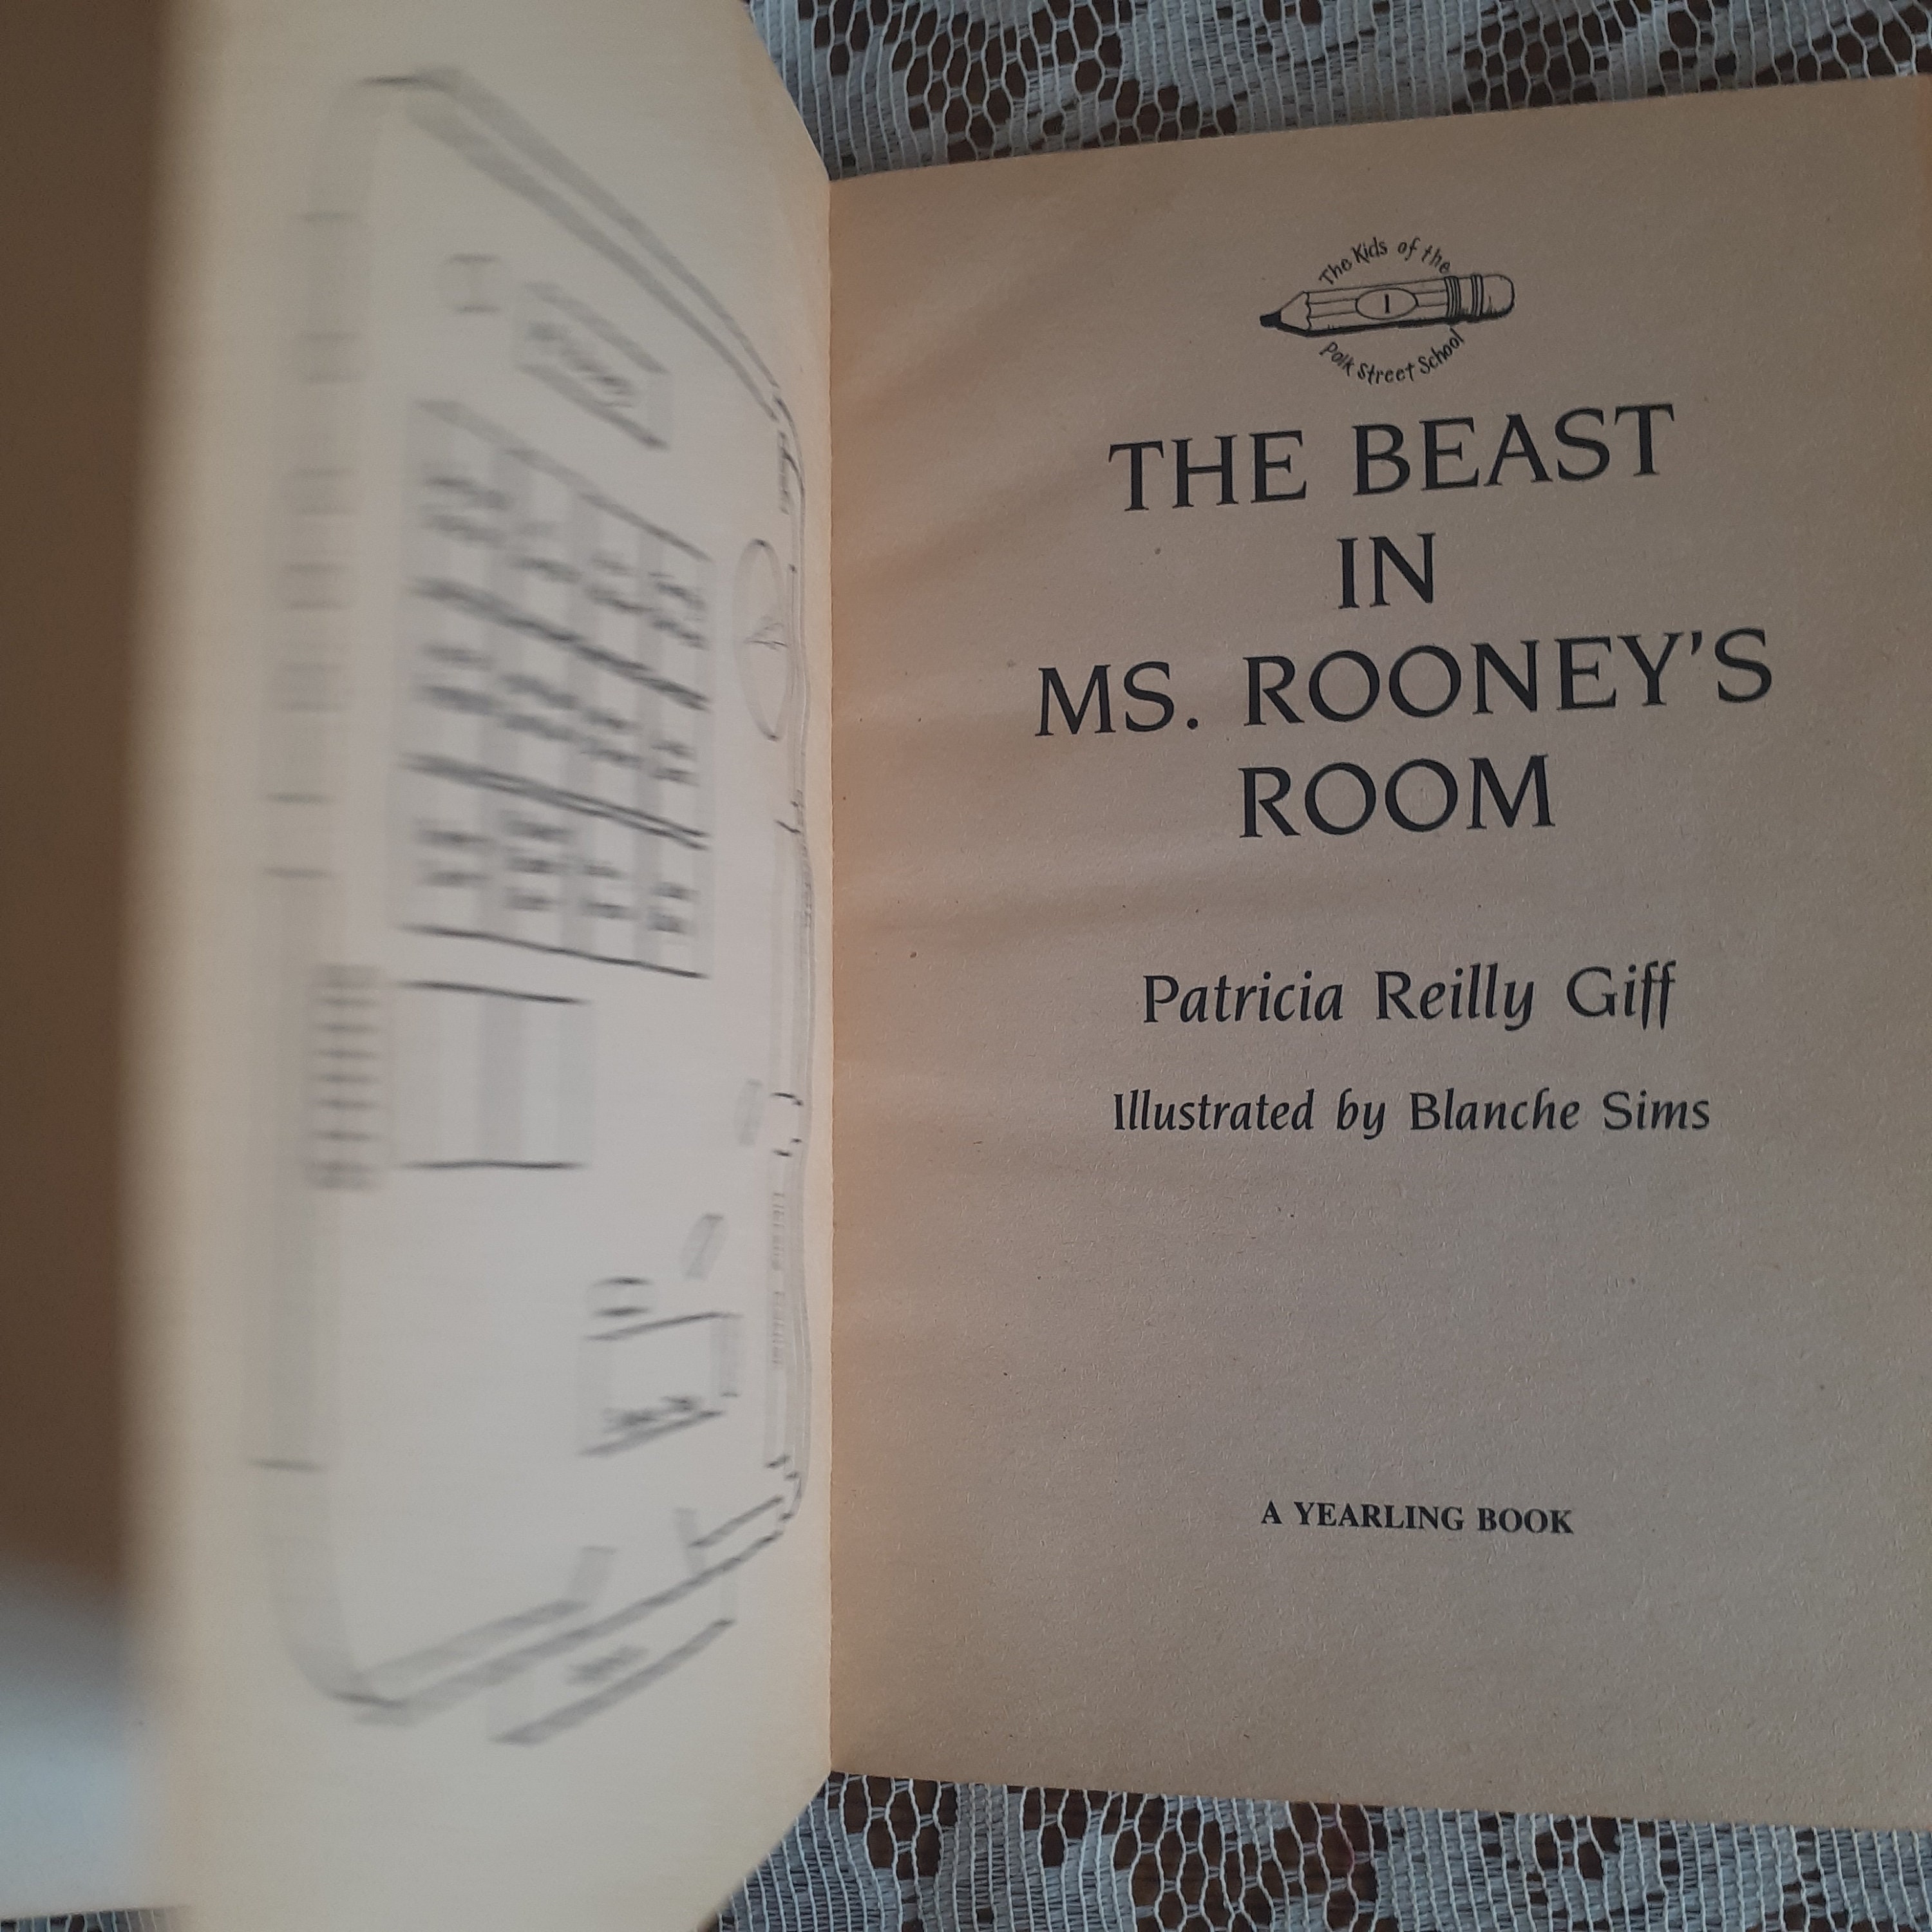 Patricia Reilly Giff, 'Polk Street' Children's Book Writer, Dies at 86 -  The New York Times